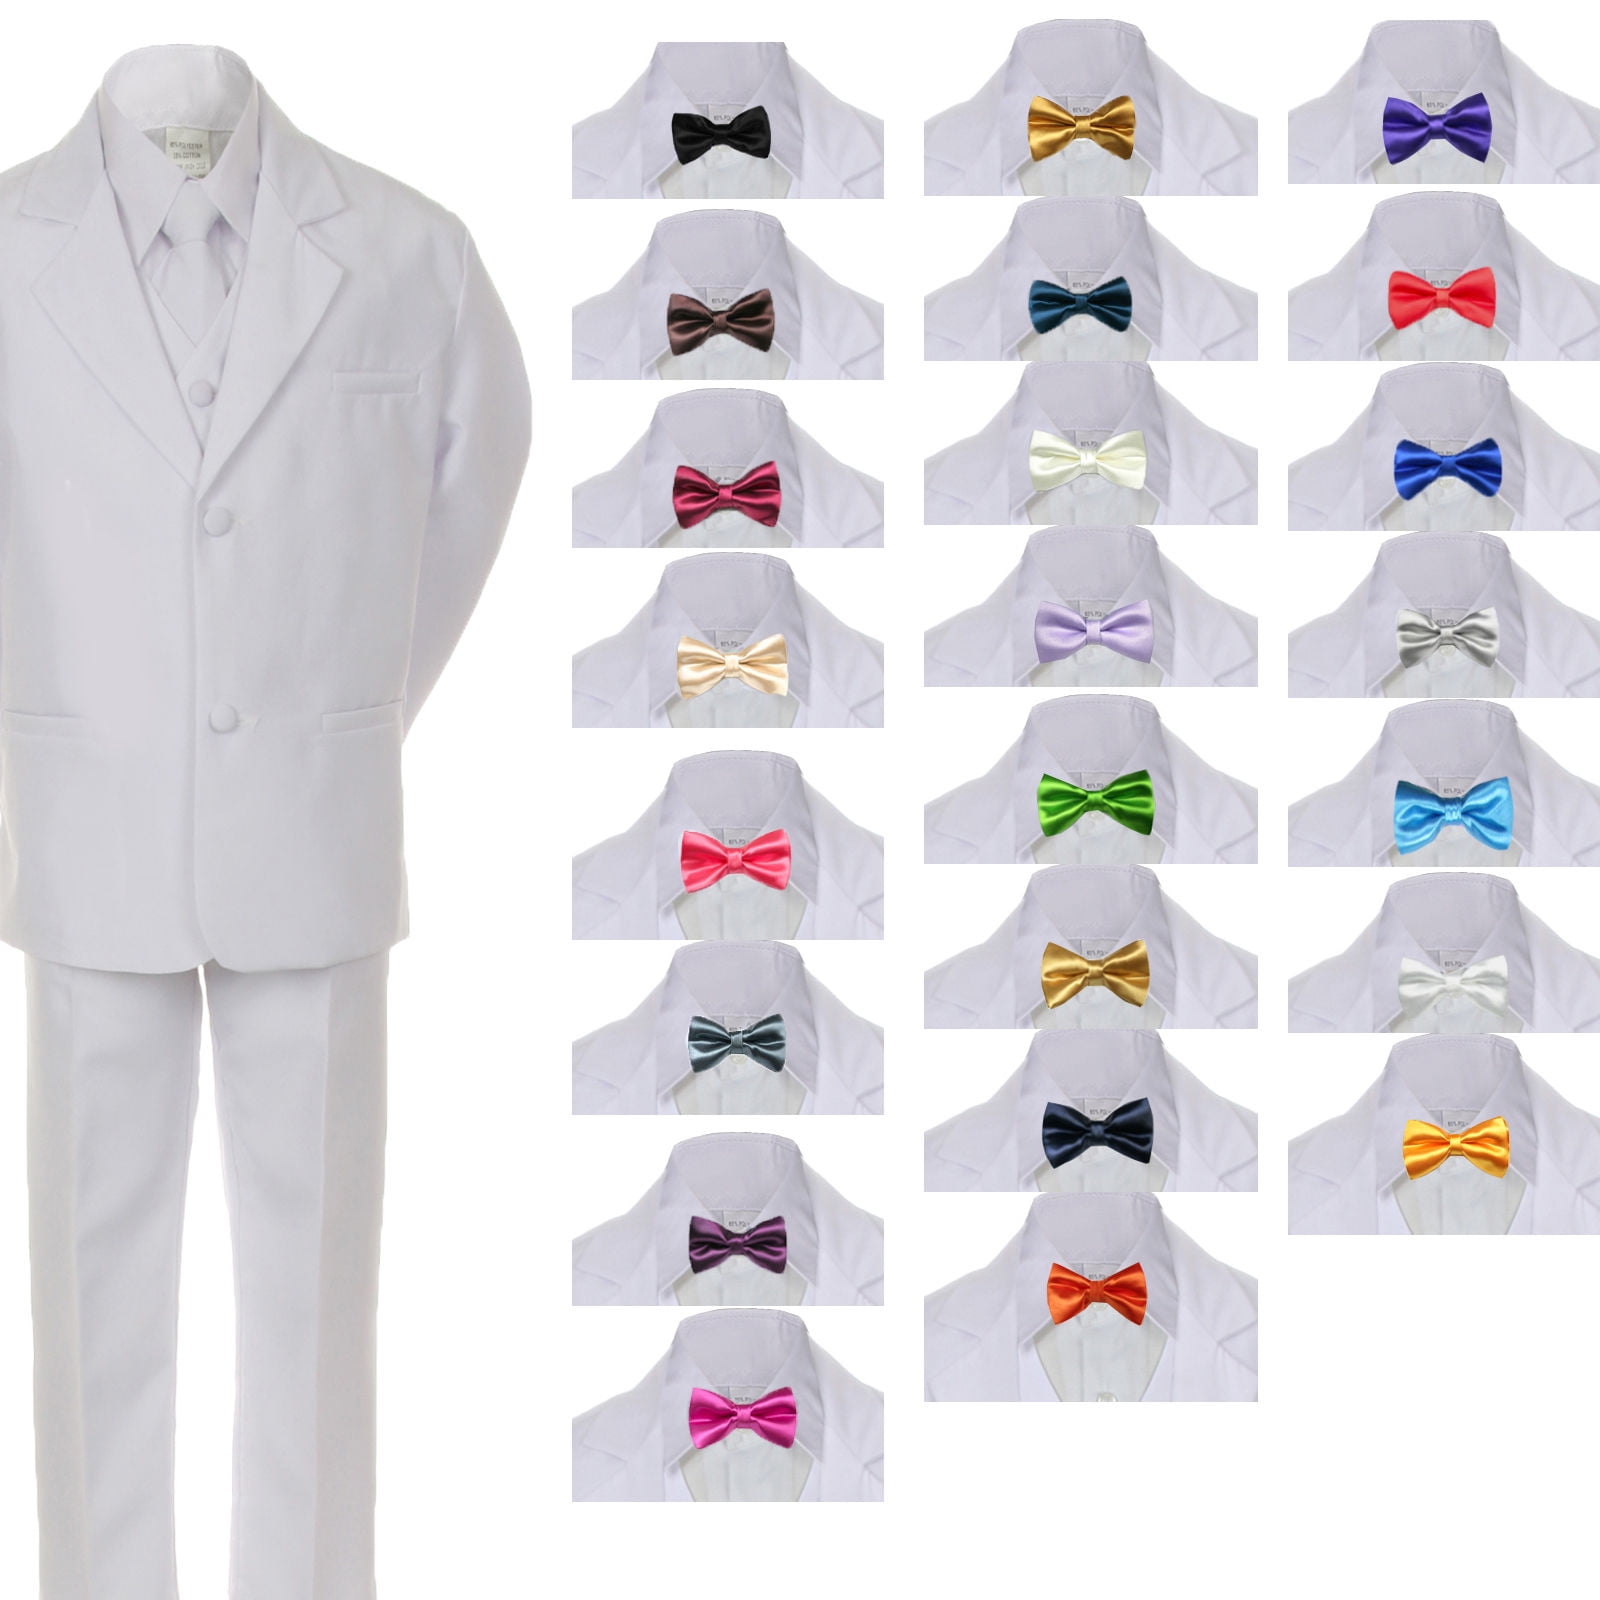 6pc Baby Toddler Kid Boy White Formal Wedding Suit Tuxedo w/ Satin Necktie S-7 